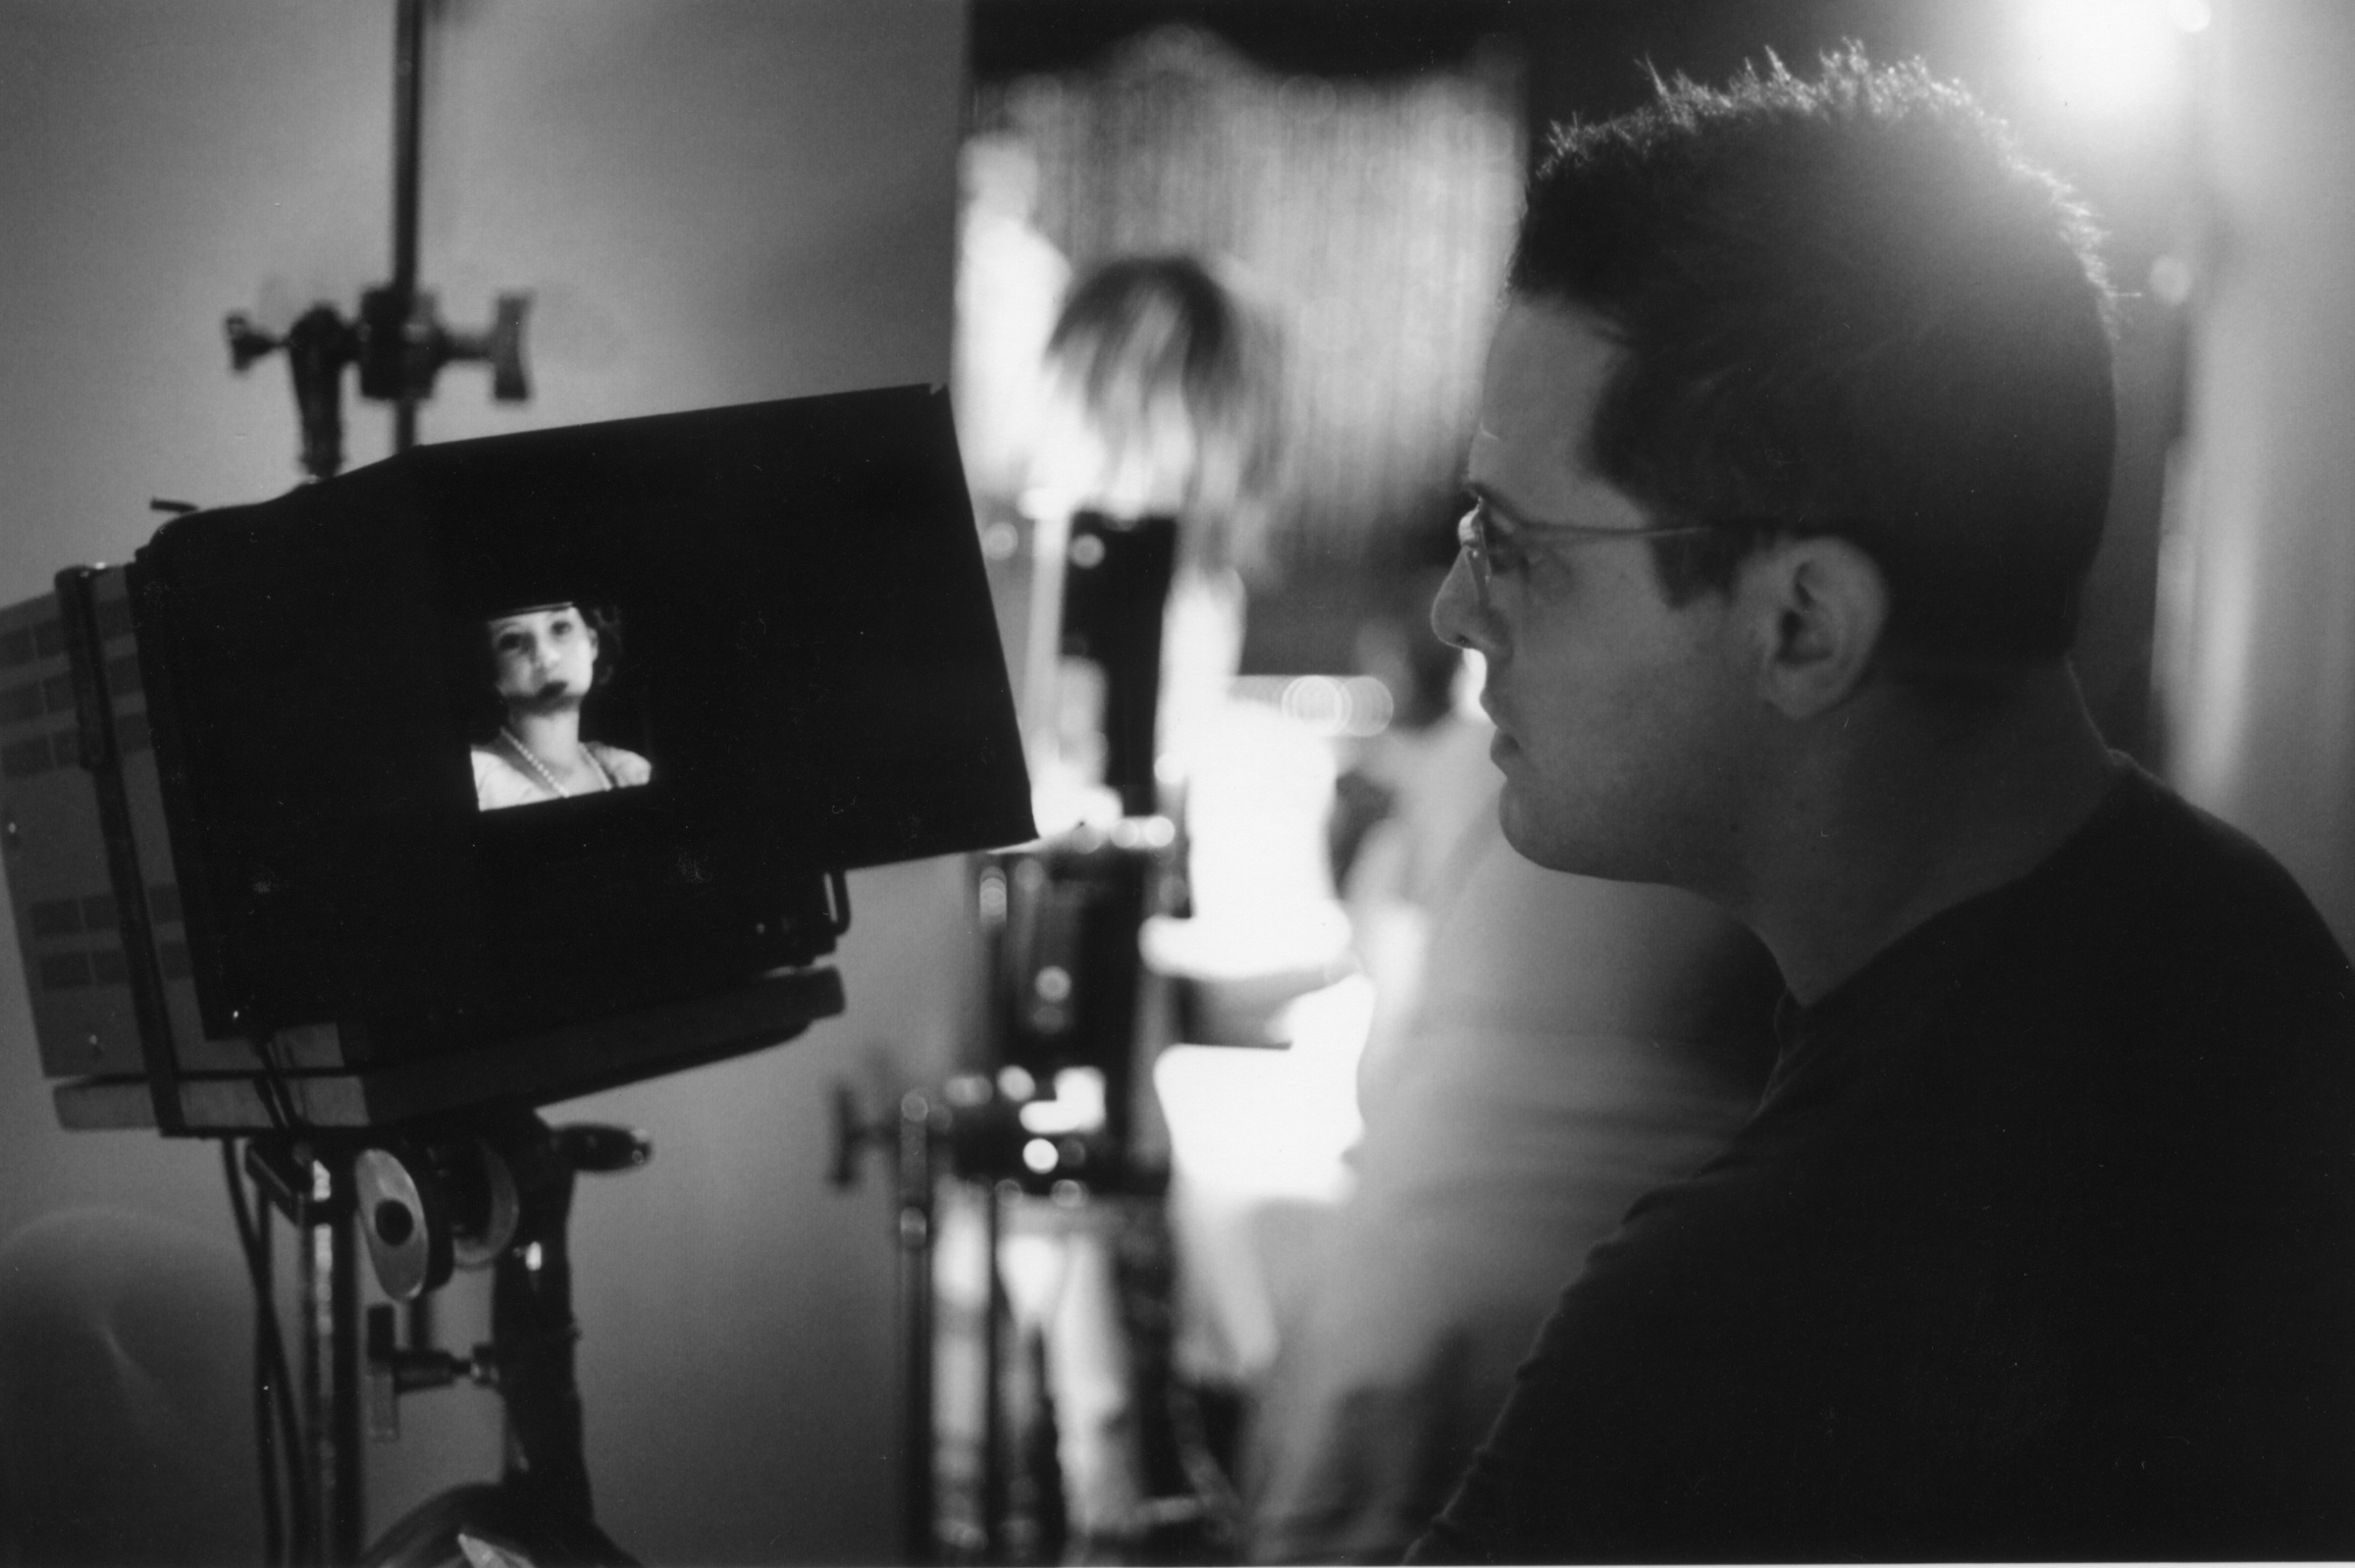 Director David Boisclair on the set of LADIES AND GENTLEMEN (2005).